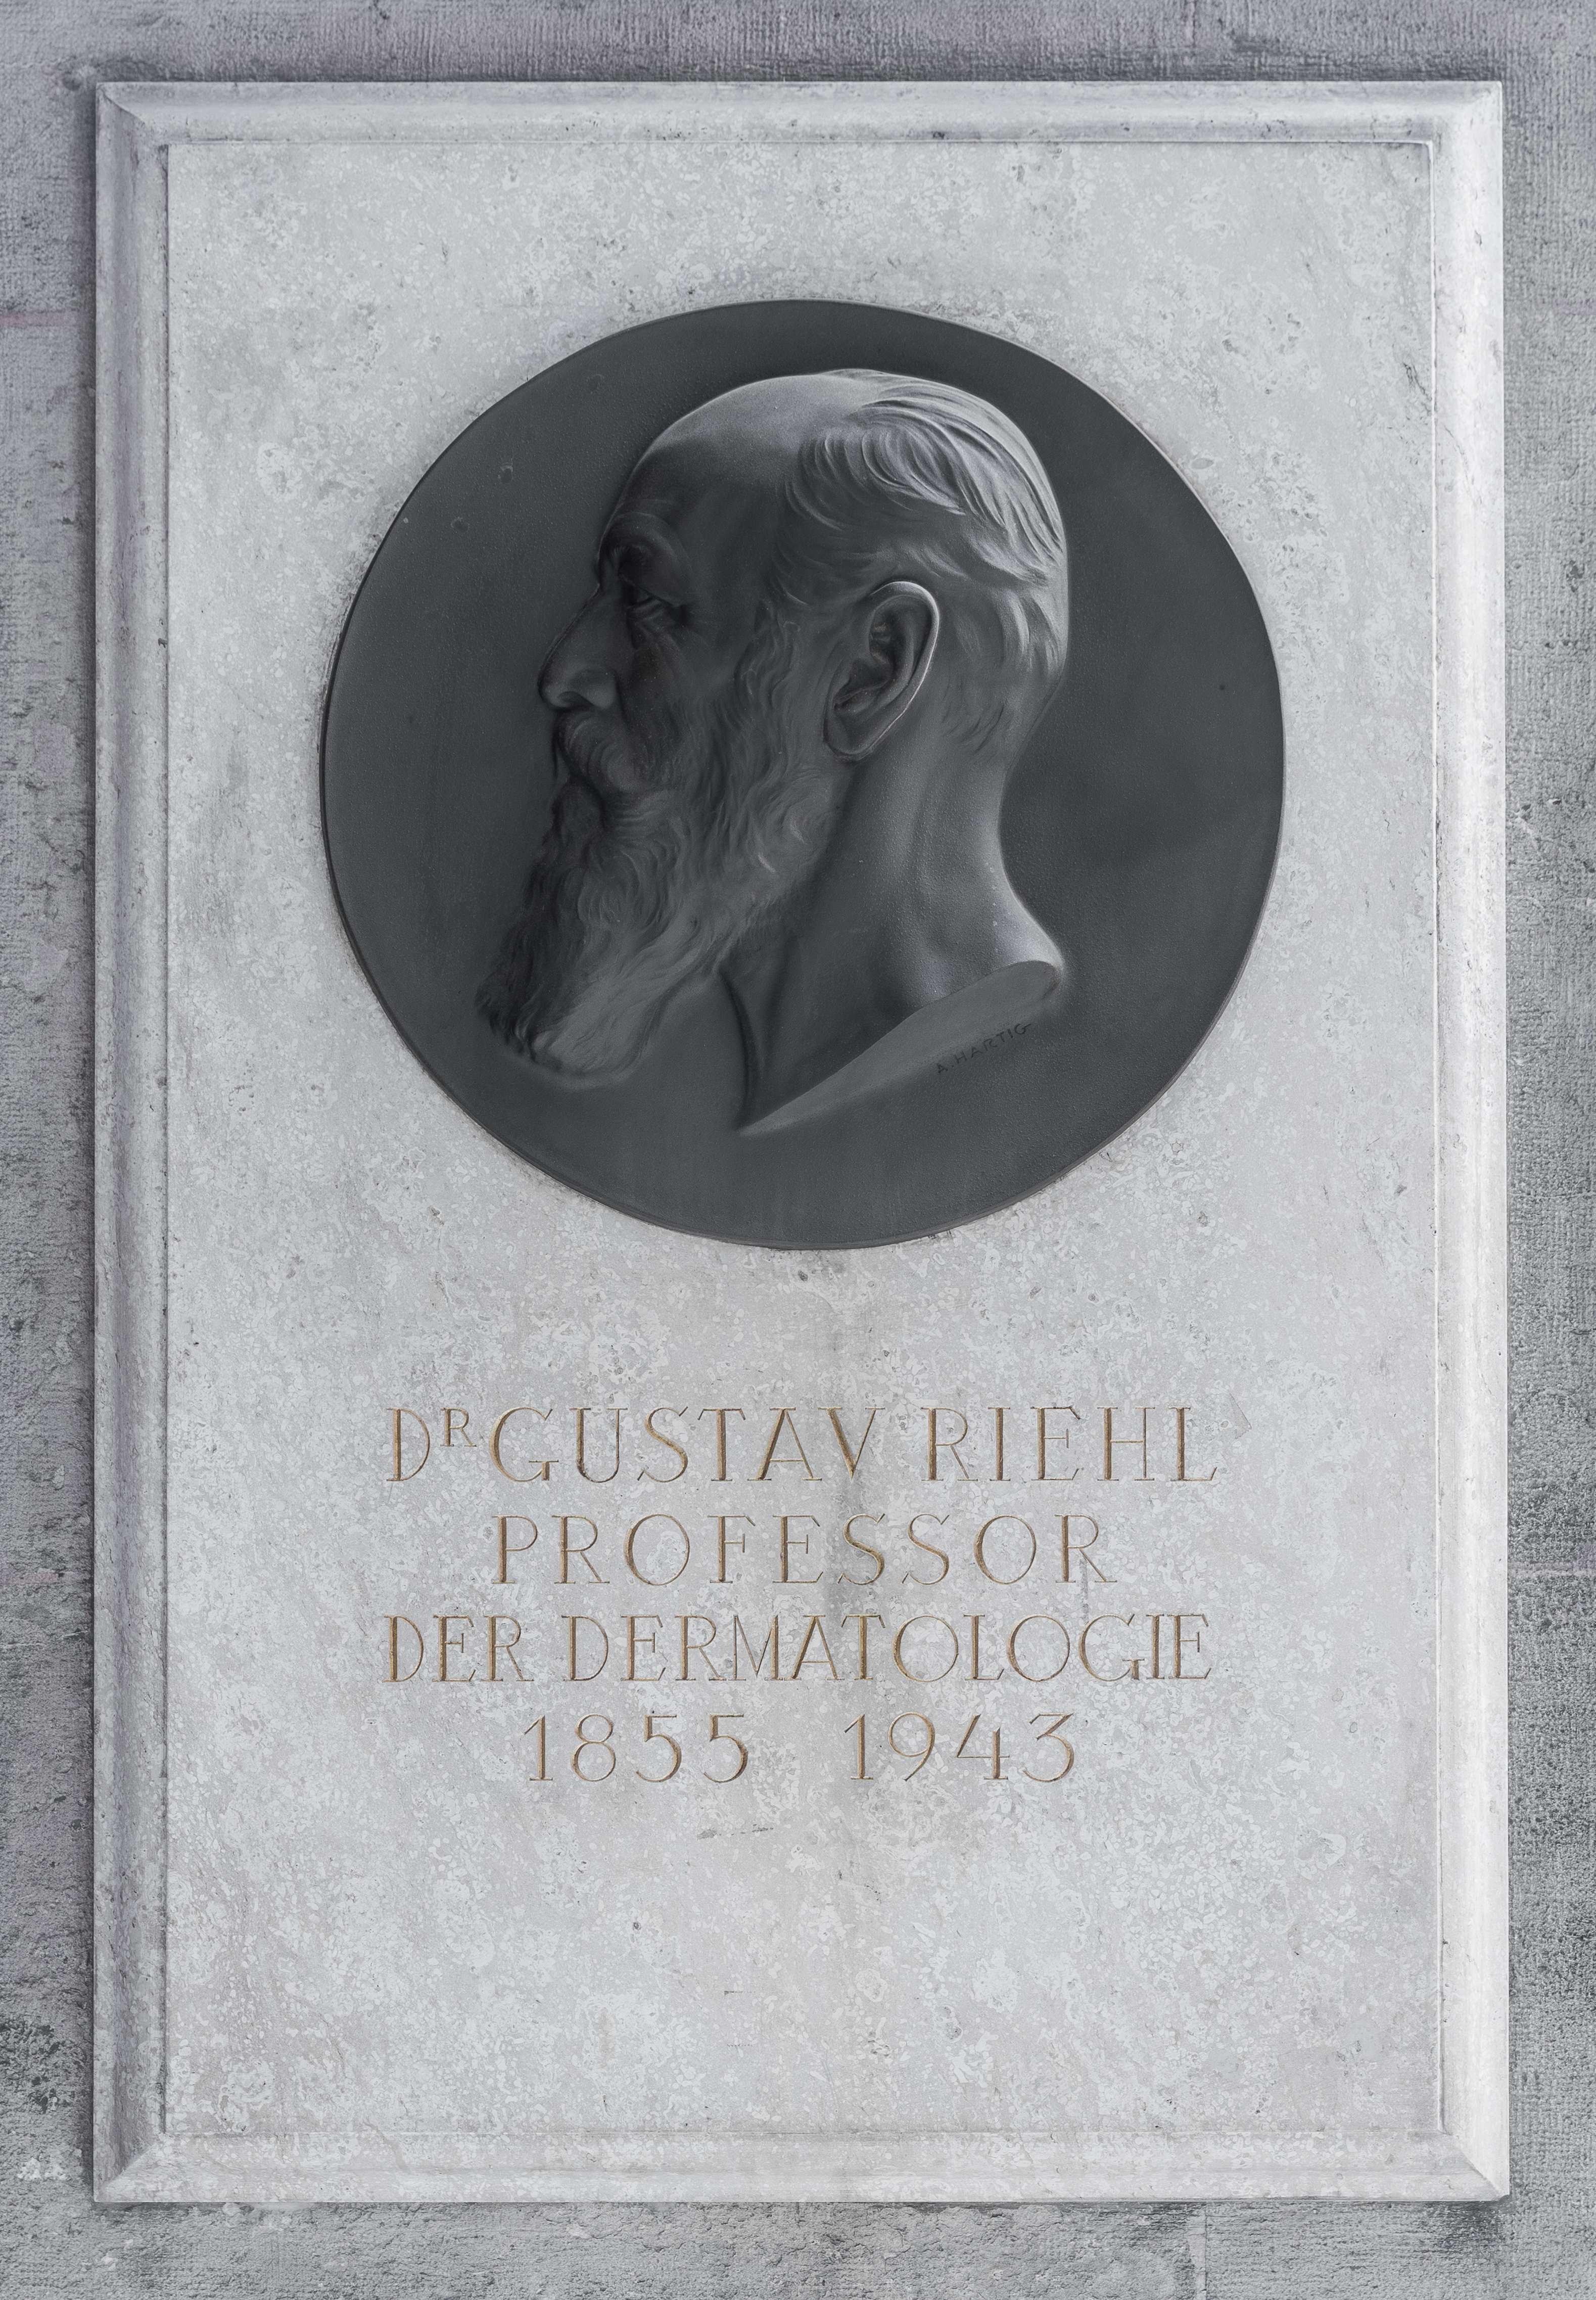 Gustav Riehl (1855-1943), Nr. 92 basrelief (bronce) in the Arkadenhof of the University of Vienna-2303-HDR-Bearbeitet